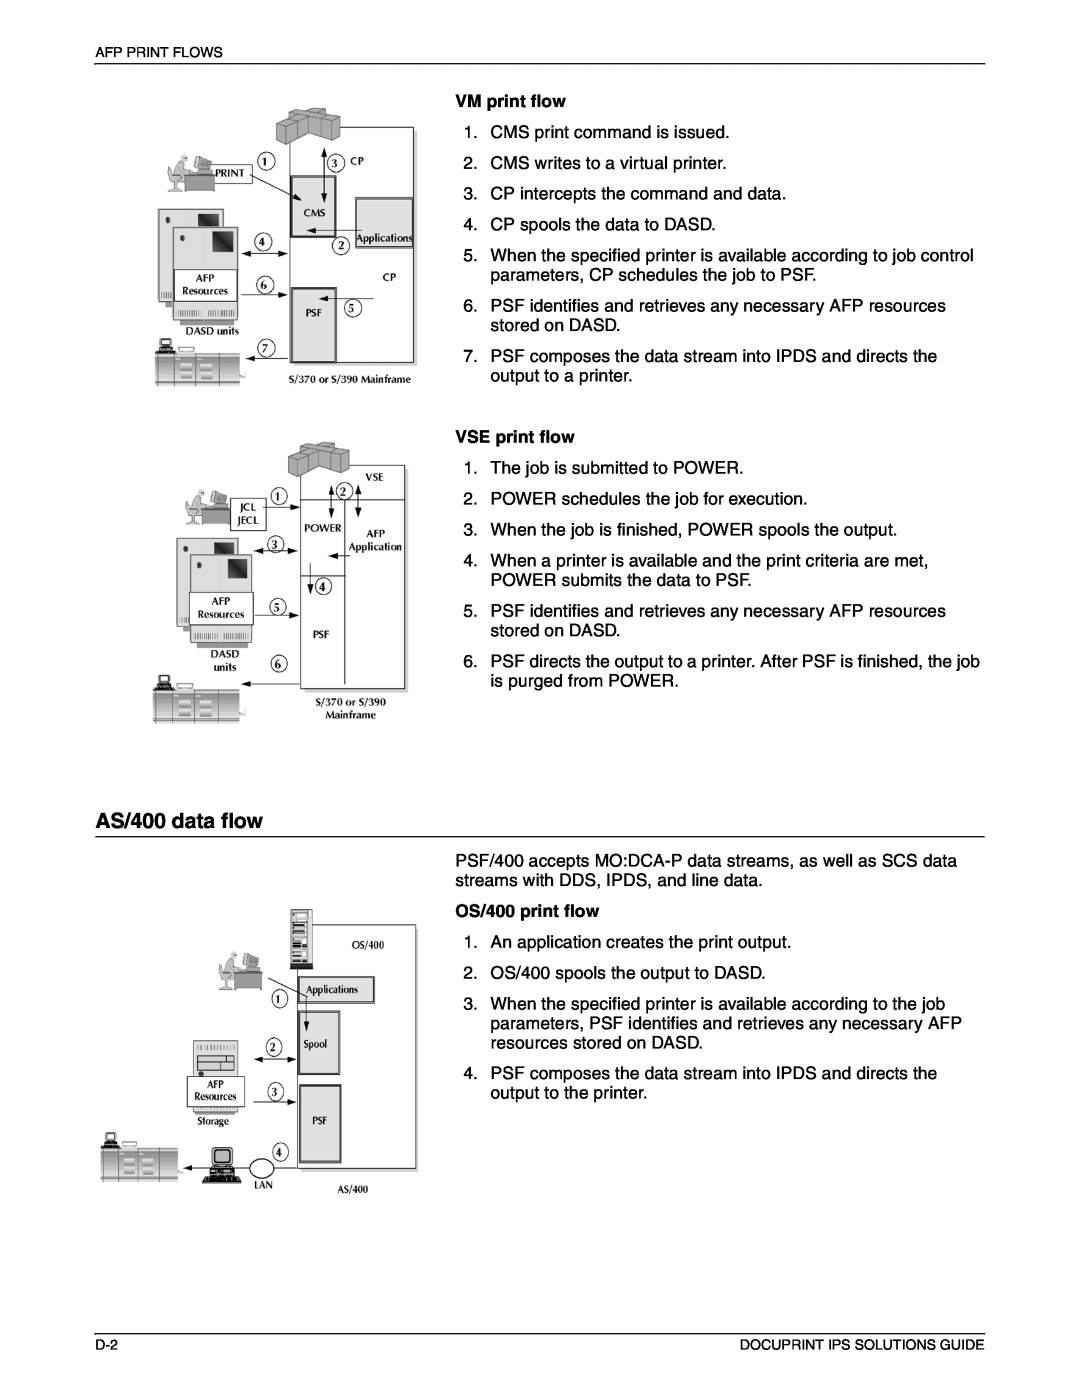 Xerox 721P88200 manual AS/400 data flow, VM print flow, VSE print flow, OS/400 print flow 